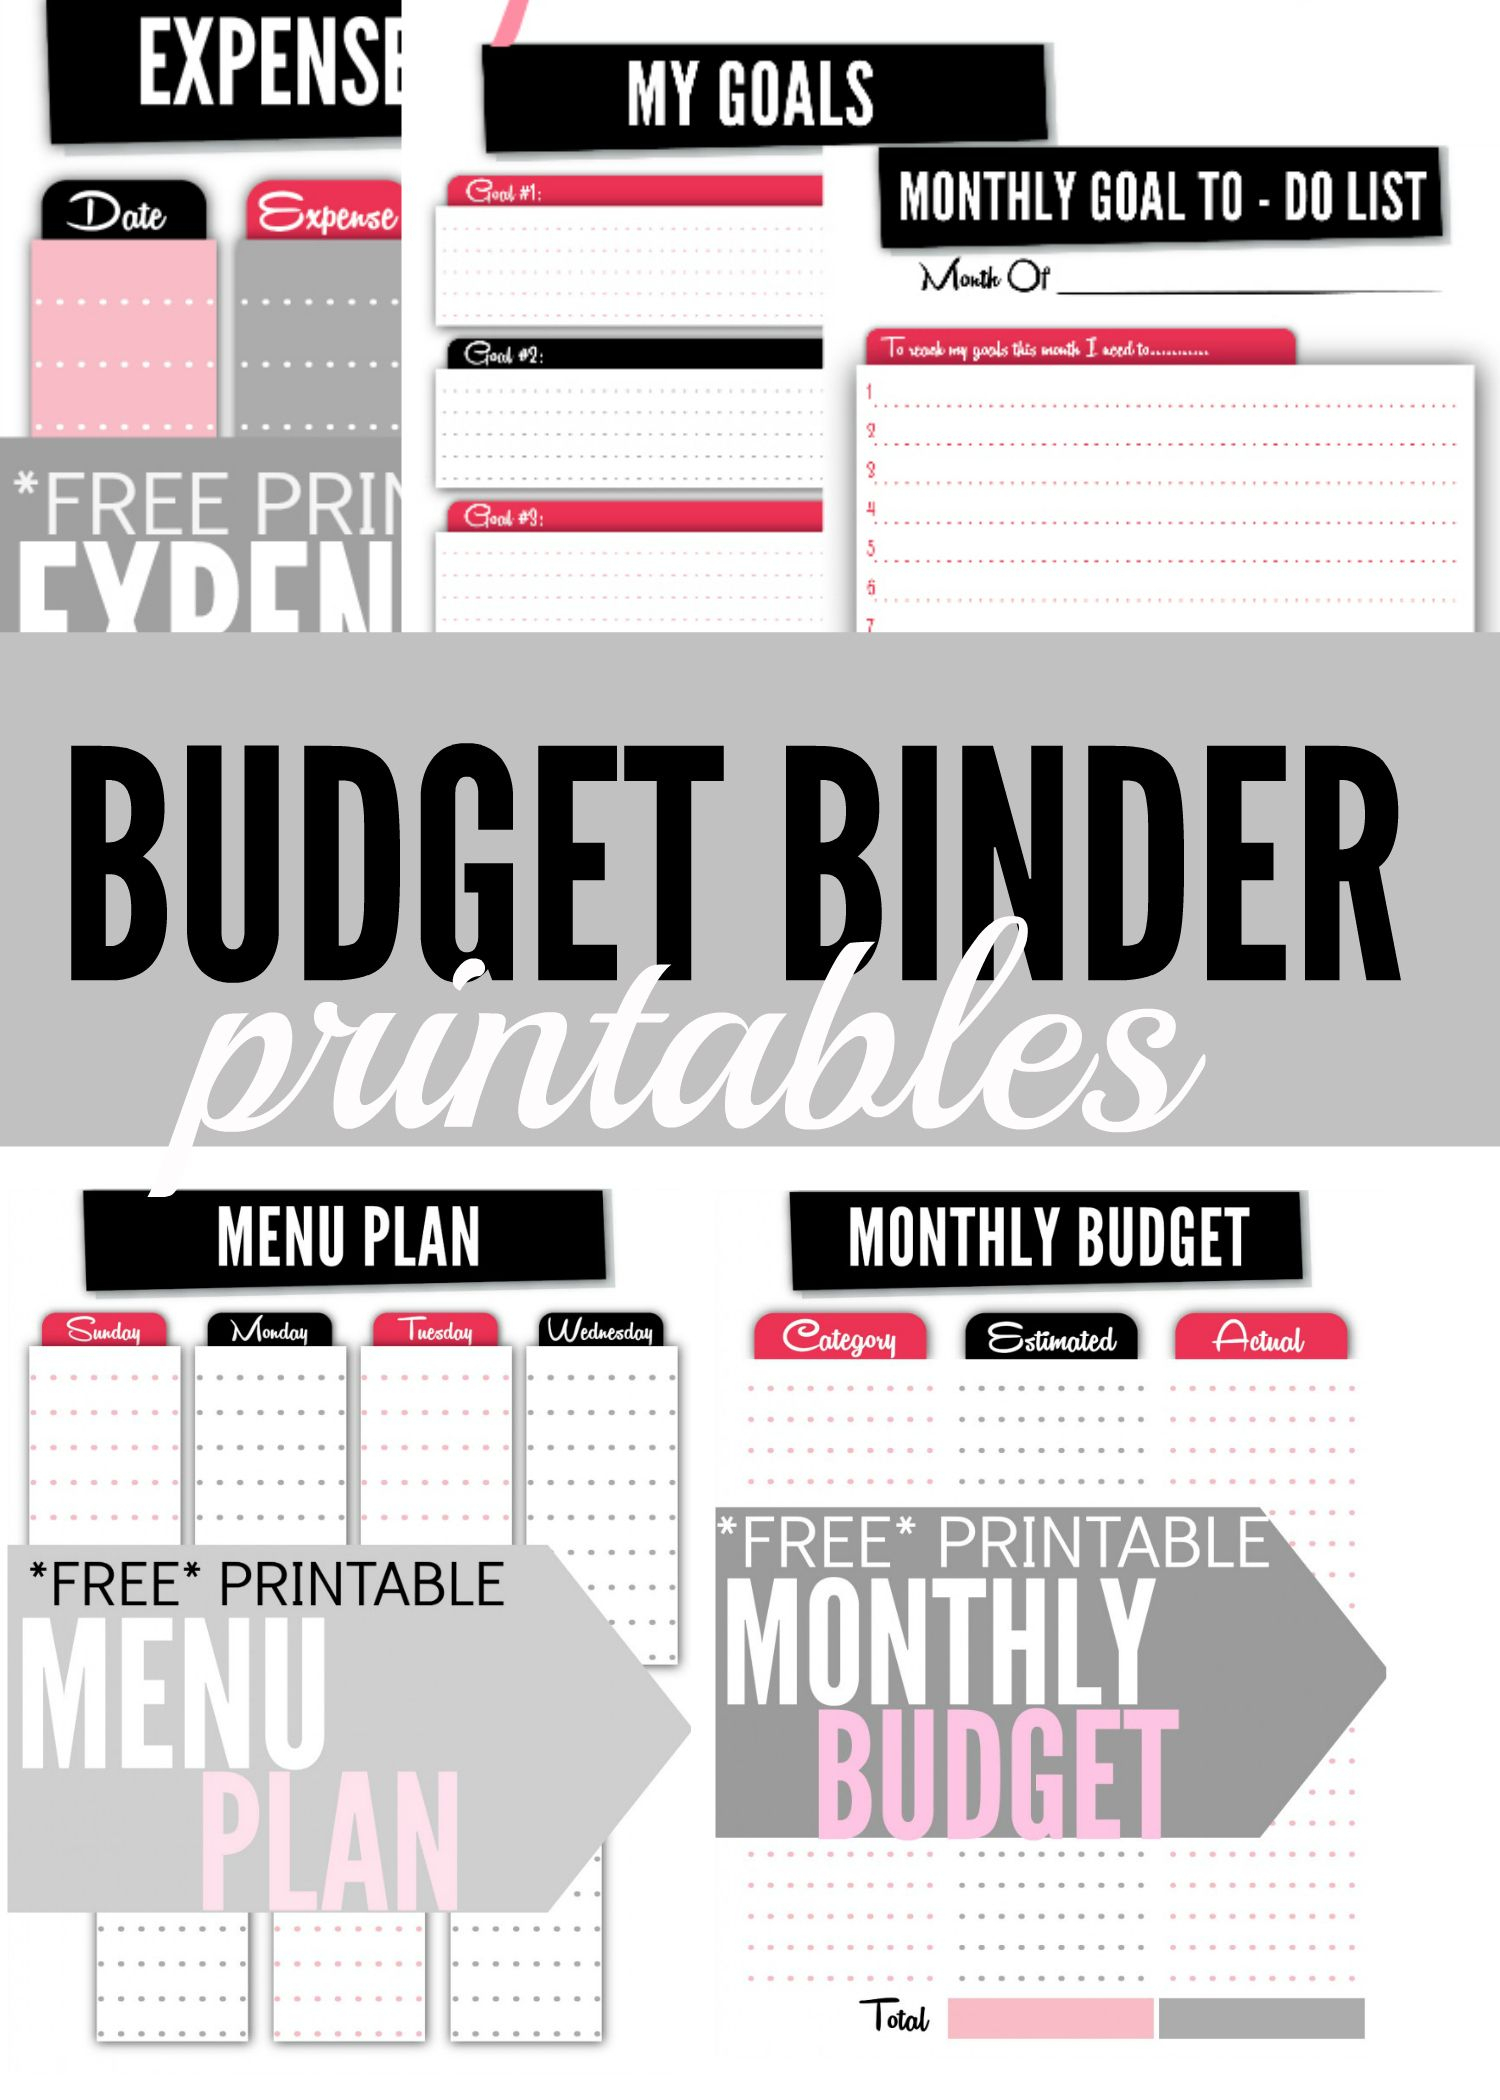 Budget Binder Printables | Thrifty Thursday @ Lwsl | Pinterest - Free Printable Budget Binder